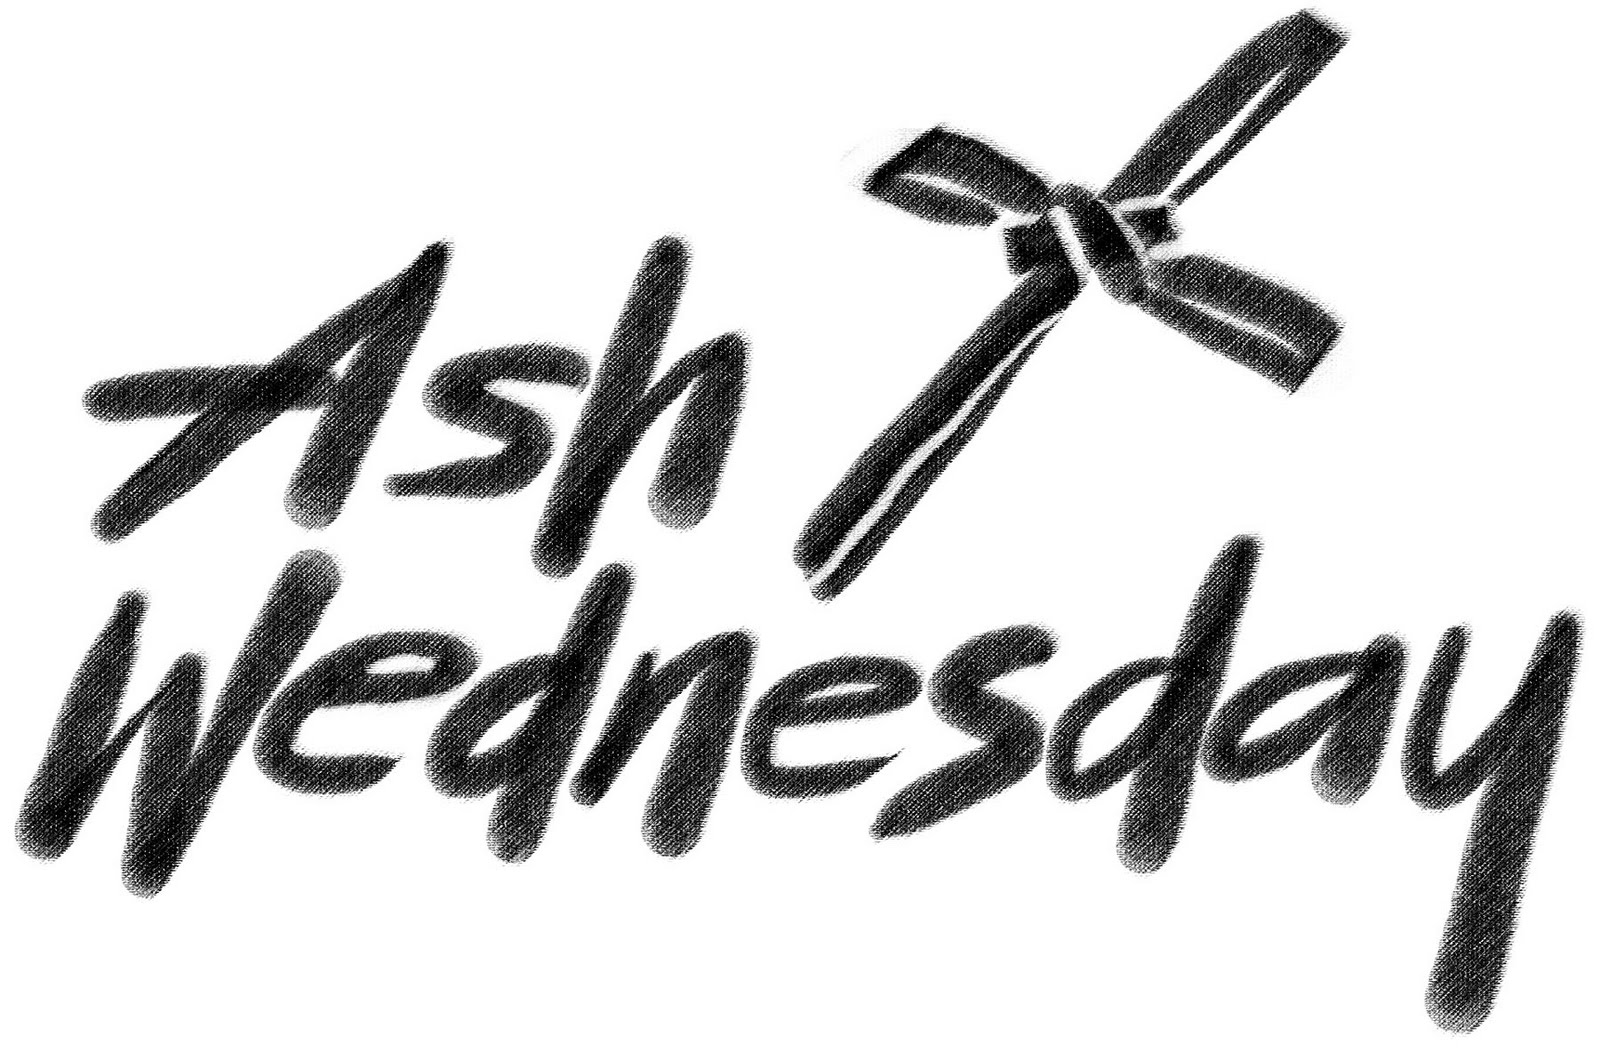 Ash Wednesday Liturgy Notes V